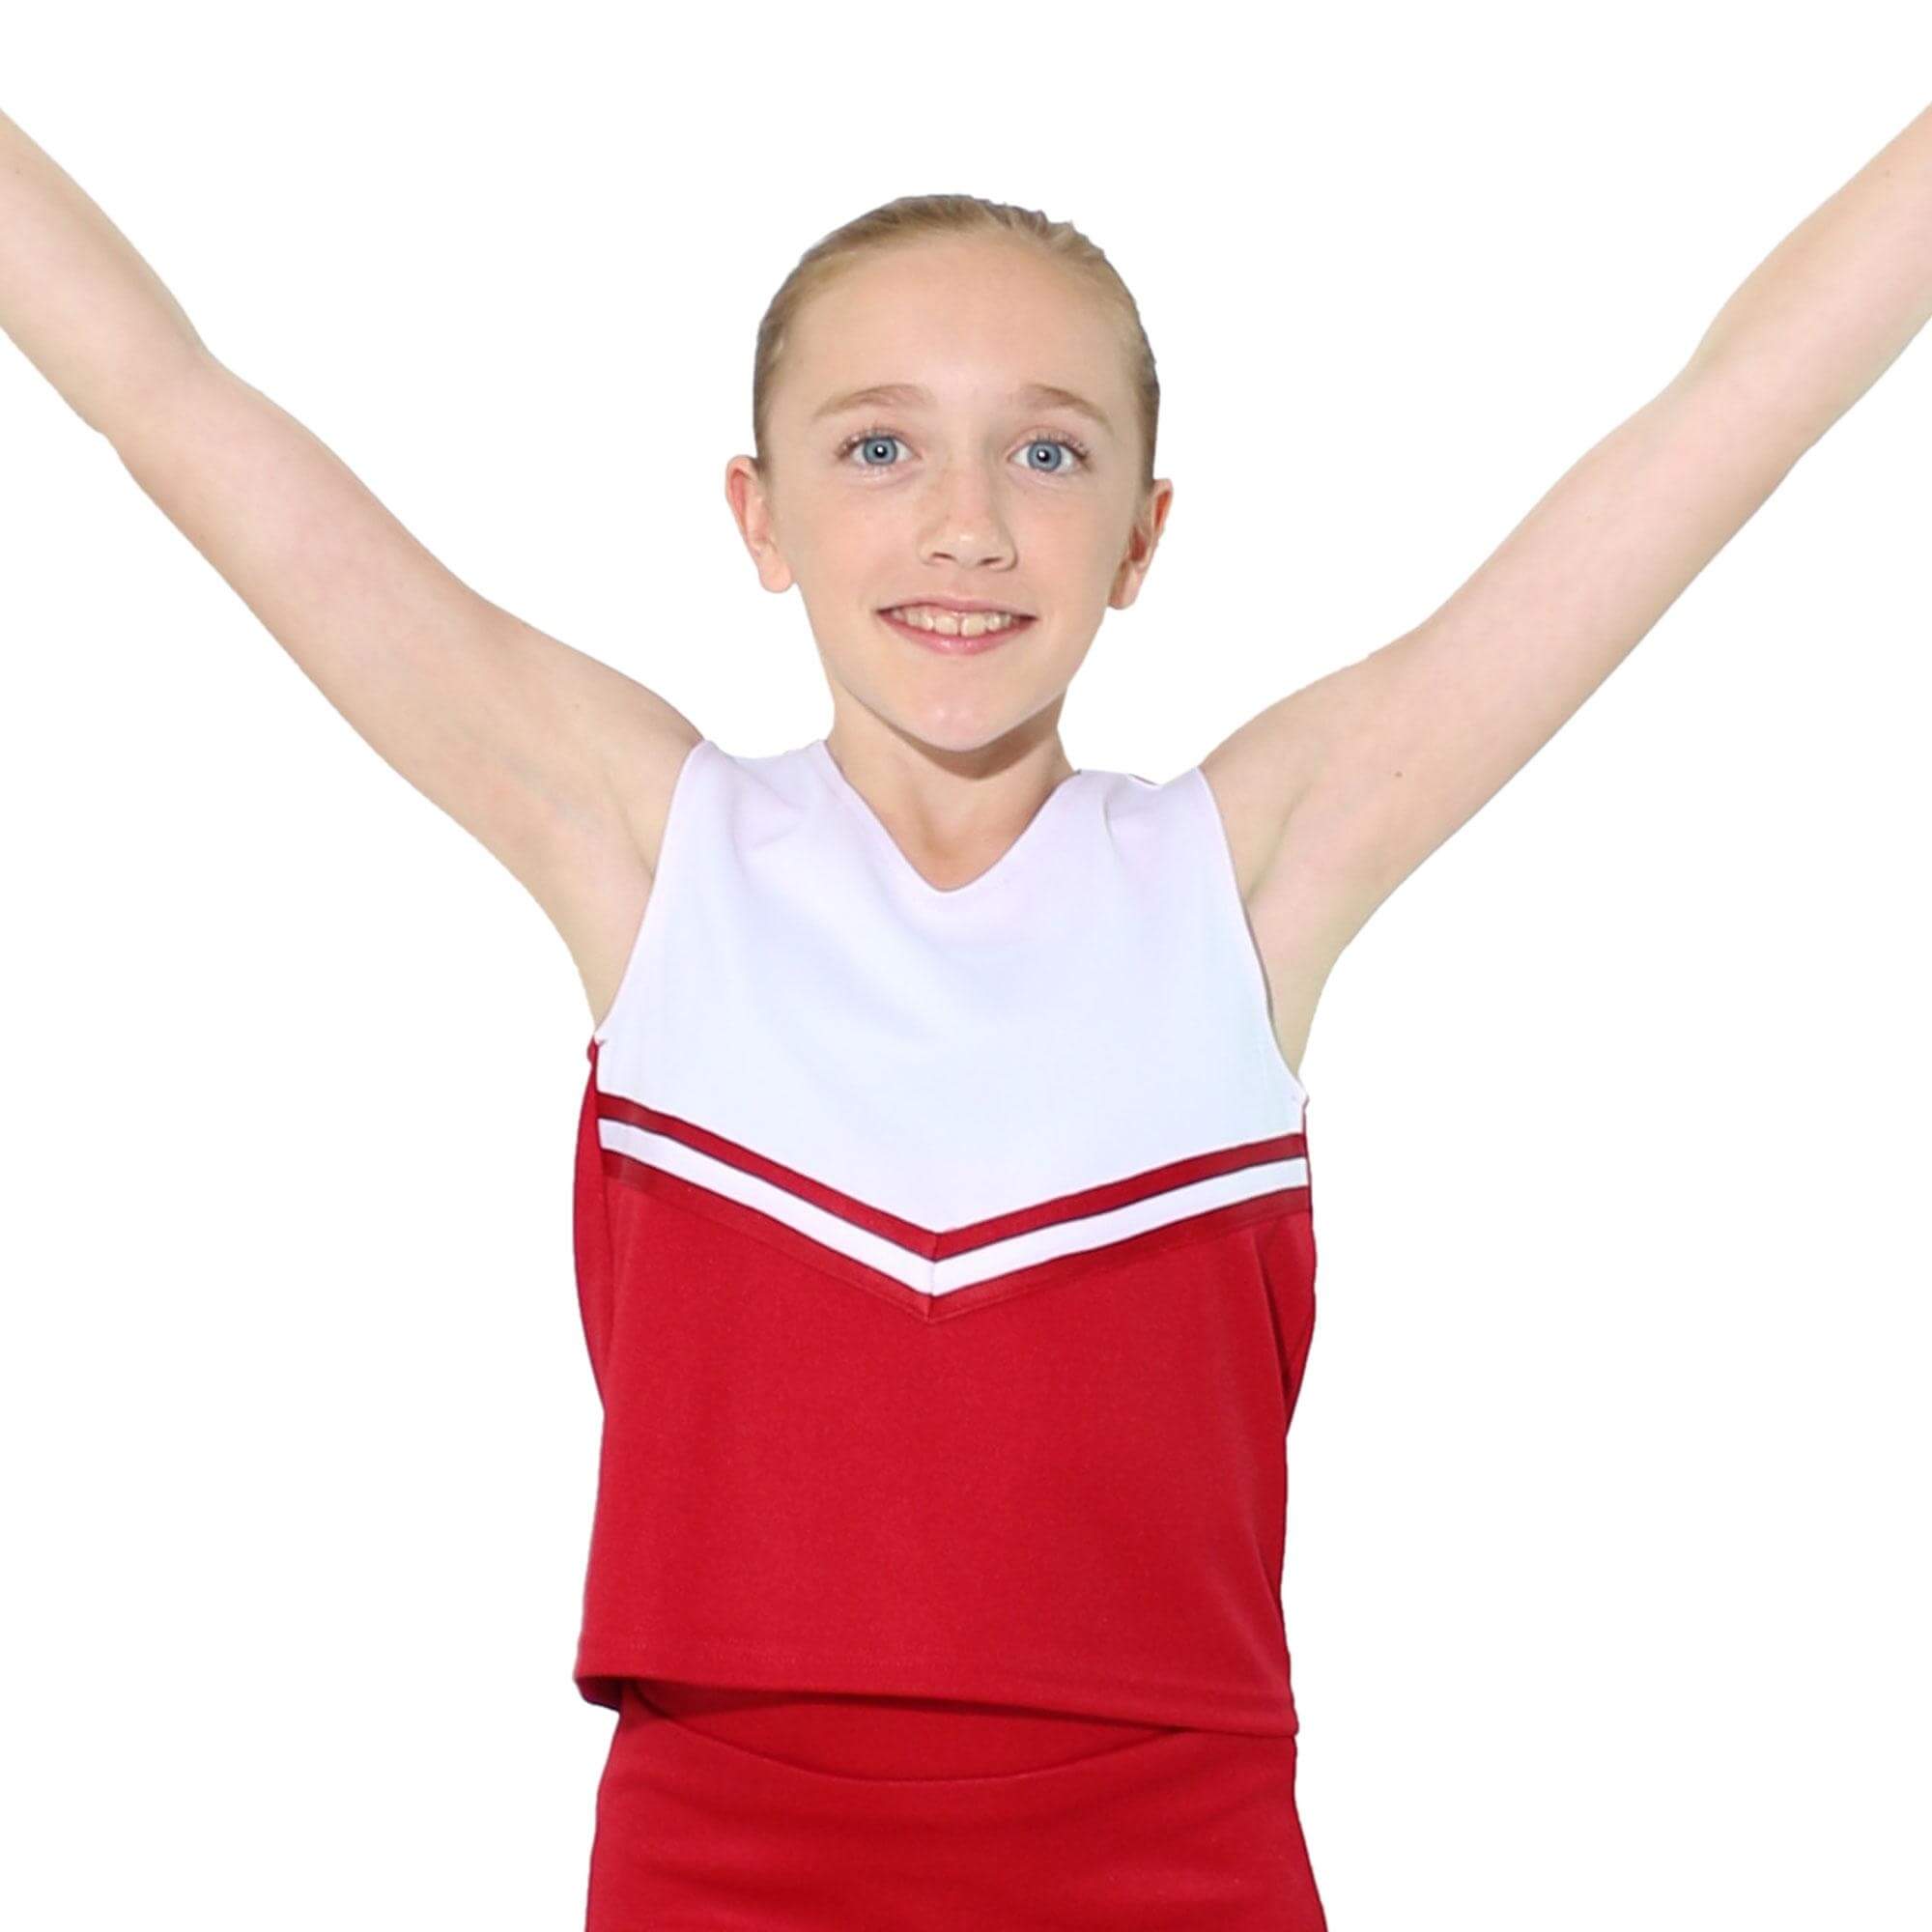 Danzcue Child V-Neck Cheerleaders Uniform Shell Top - Click Image to Close